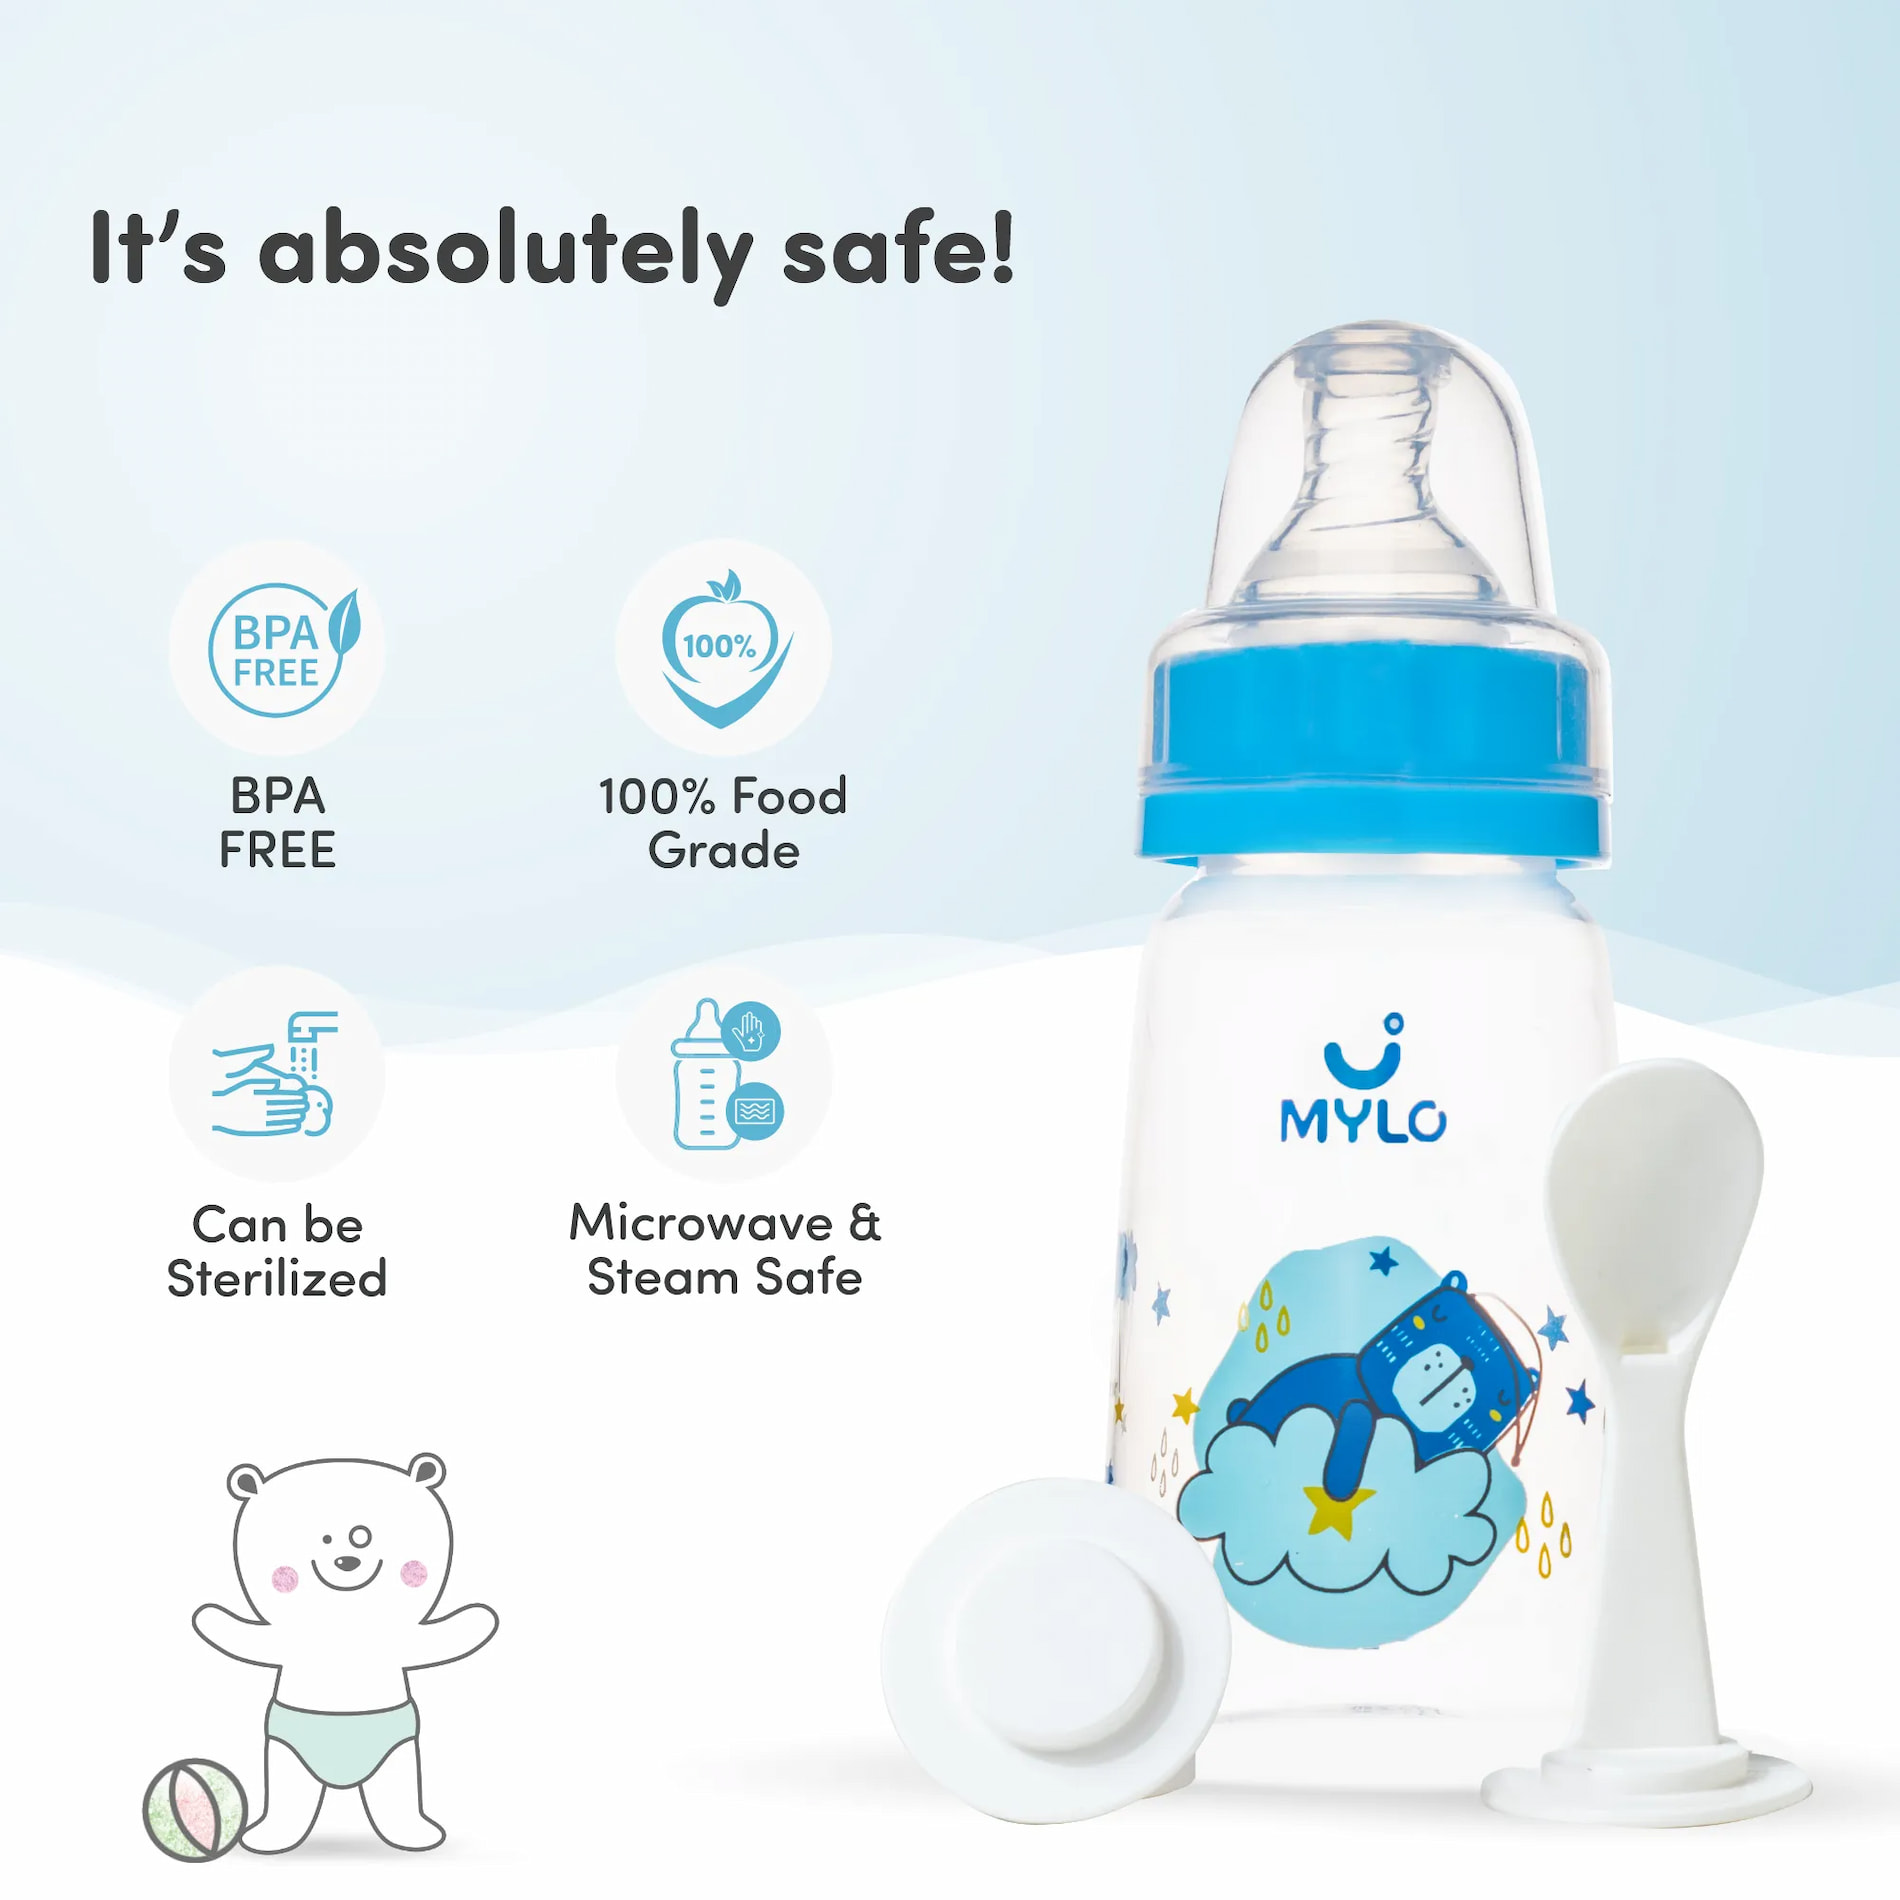 2-in-1 Baby Feeding Bottle | BPA Free with Anti-Colic Nipple & Spoon | Easy Flow Neck Design - Bear & Elephant 125ml & 250ml